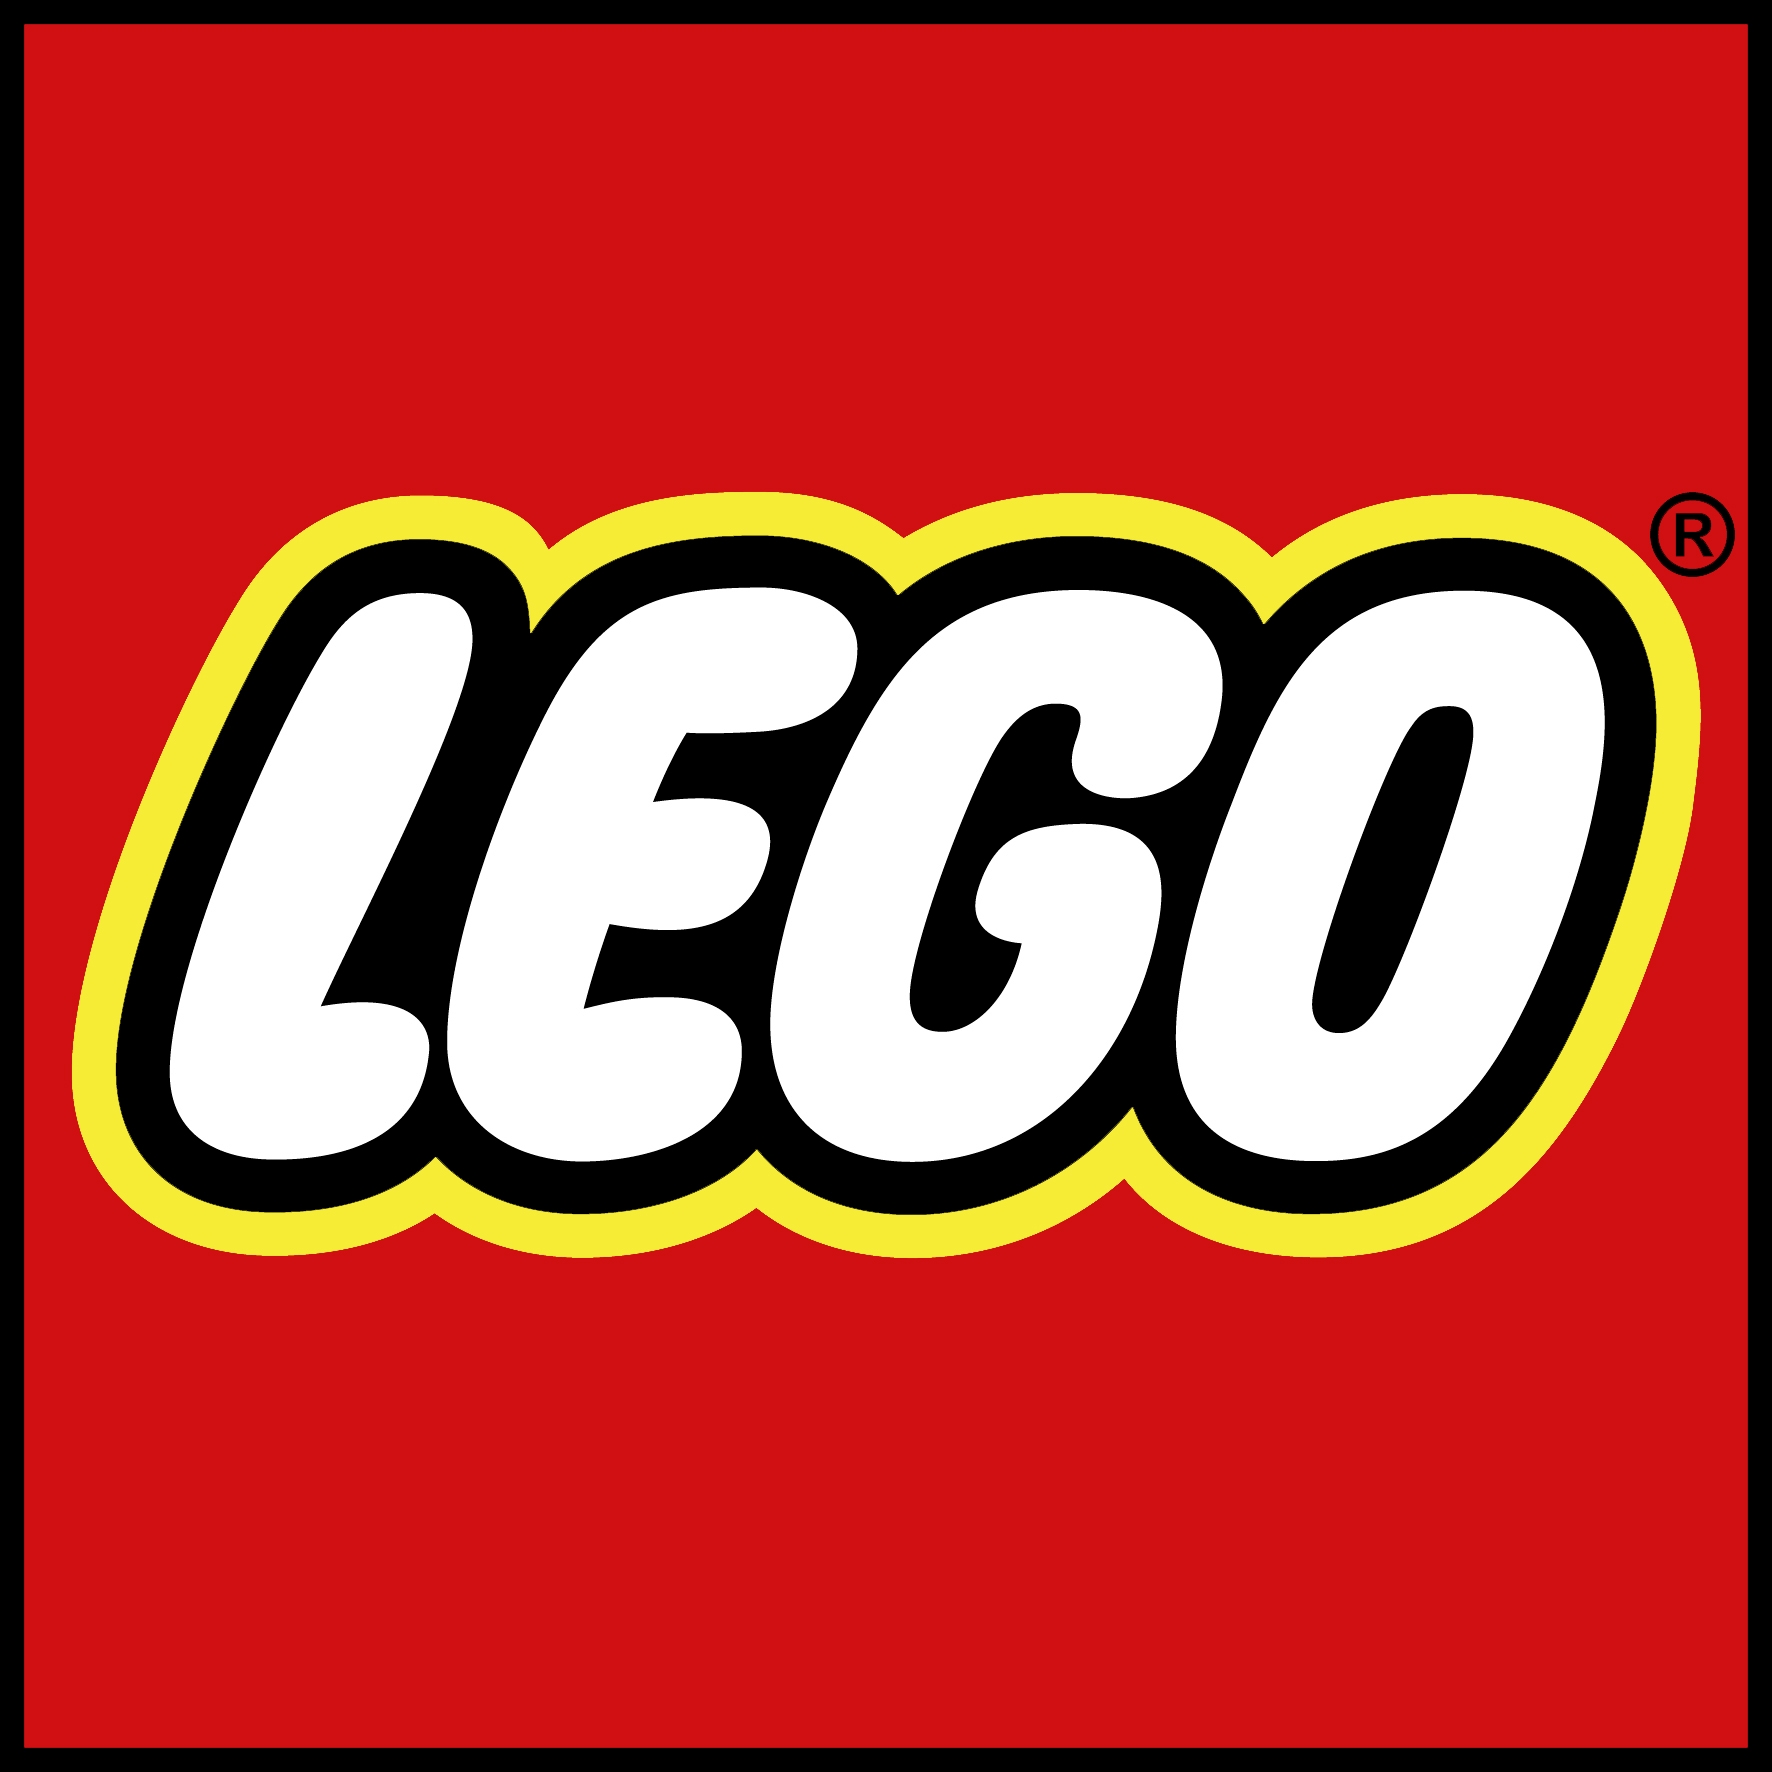 LEGO Production s.r.o.